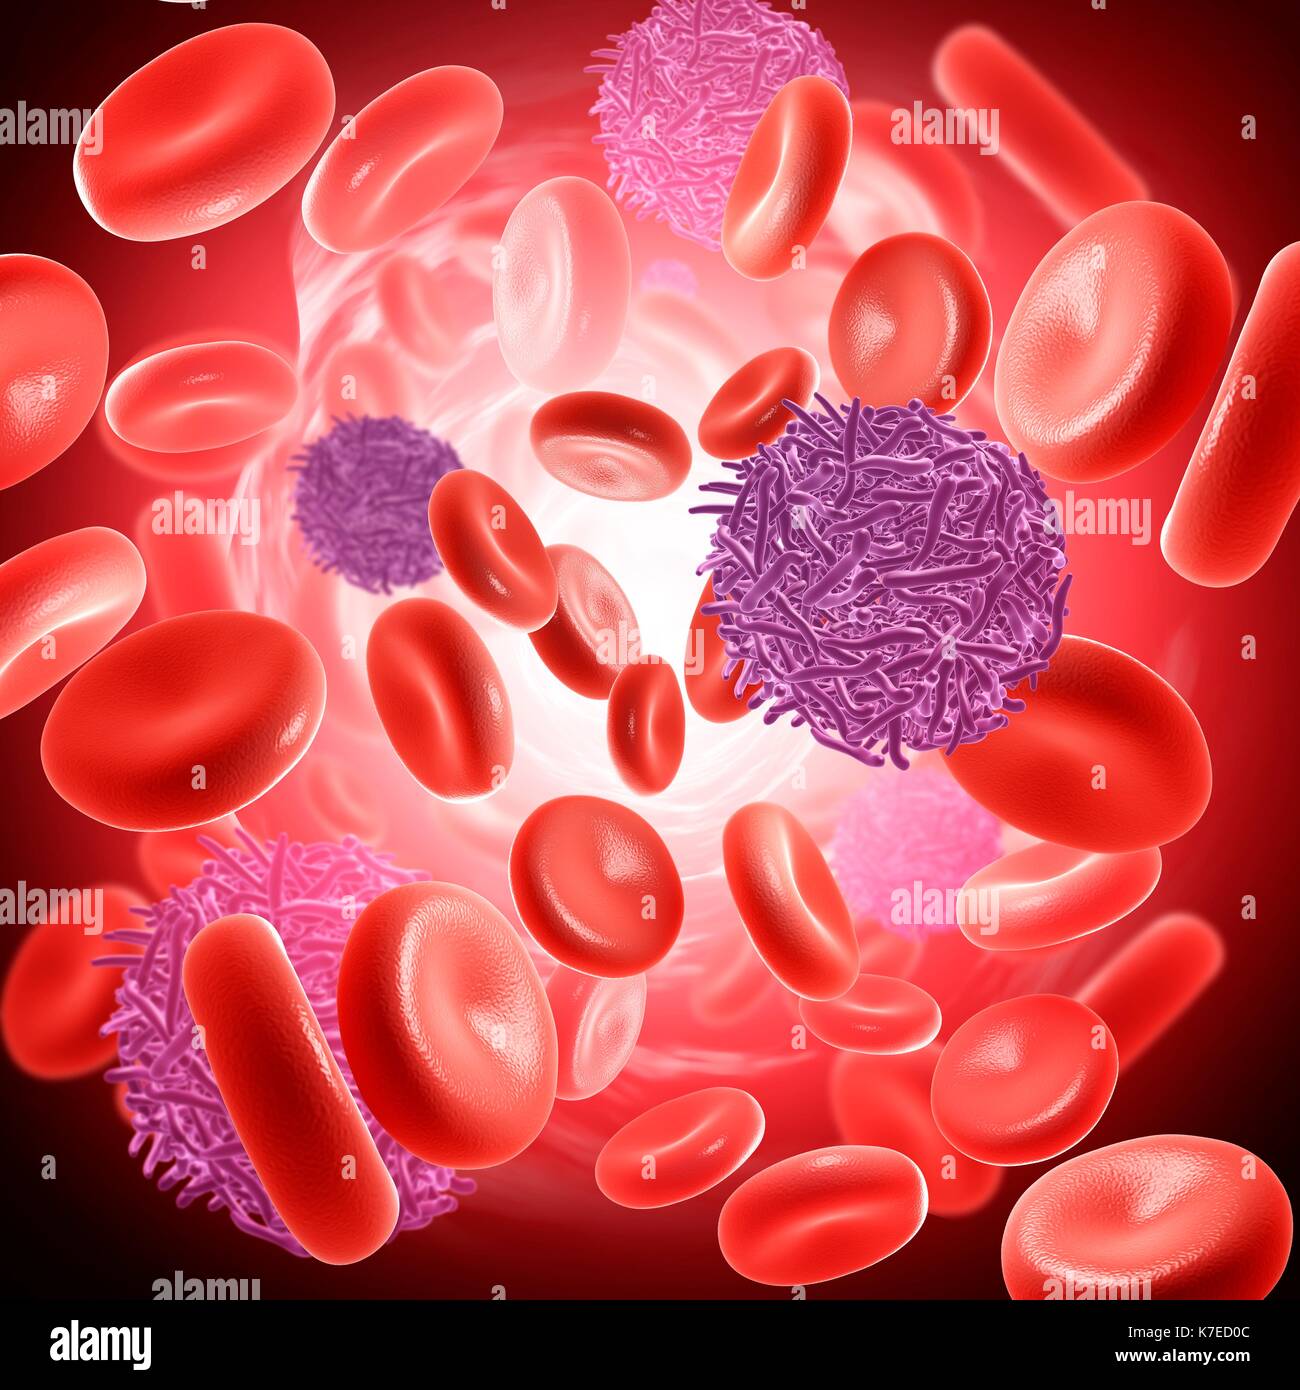 Illustration of Densovirus virus particles in the bloodstream. Stock Photo